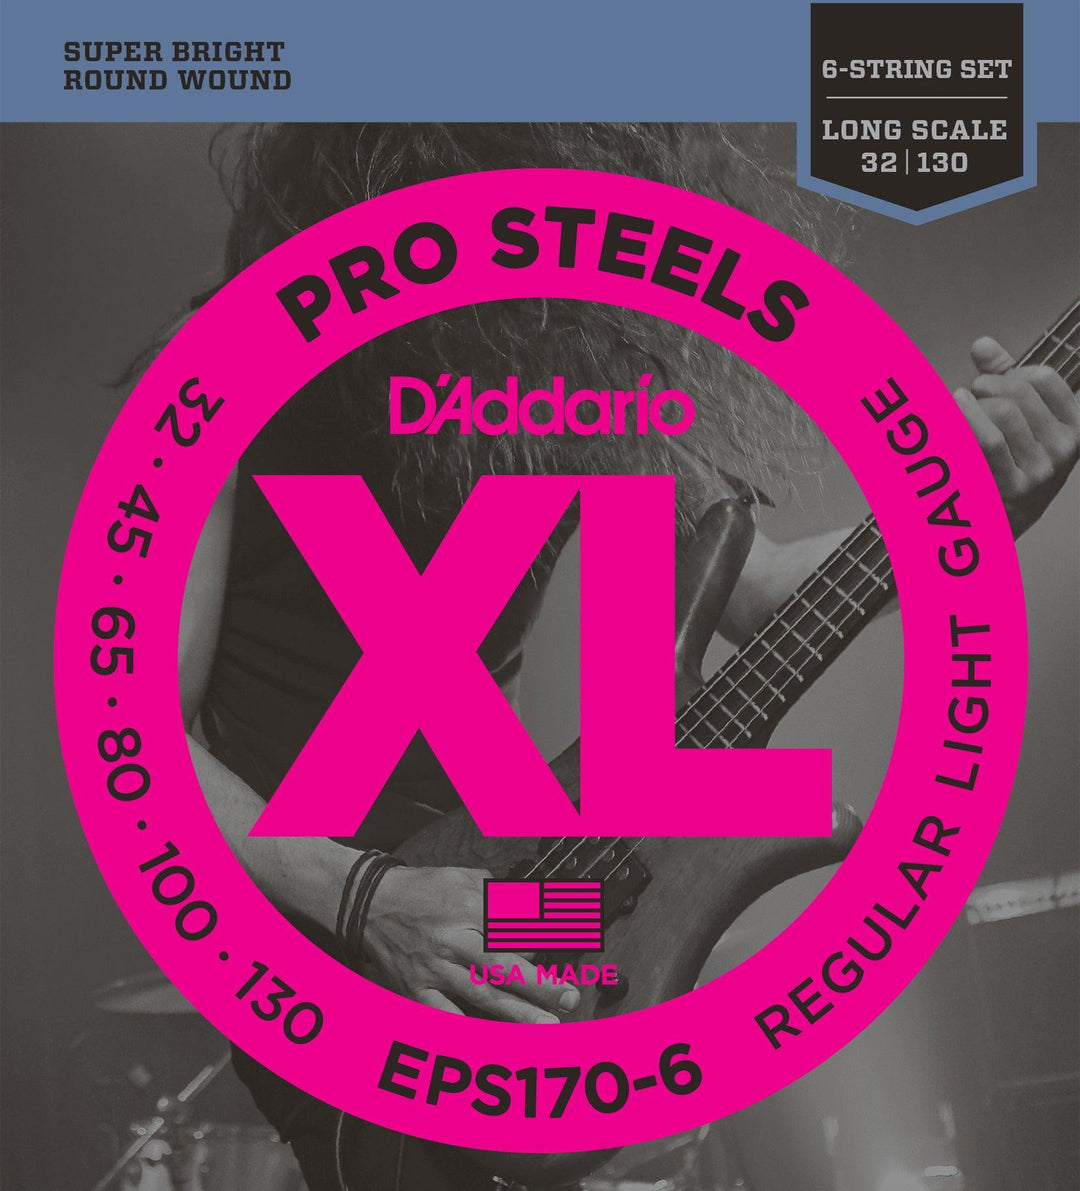 D'Addario ProSteels 6-String Bass Guitar String Set, Steel, EPS170-6 .032-.130 - A Strings